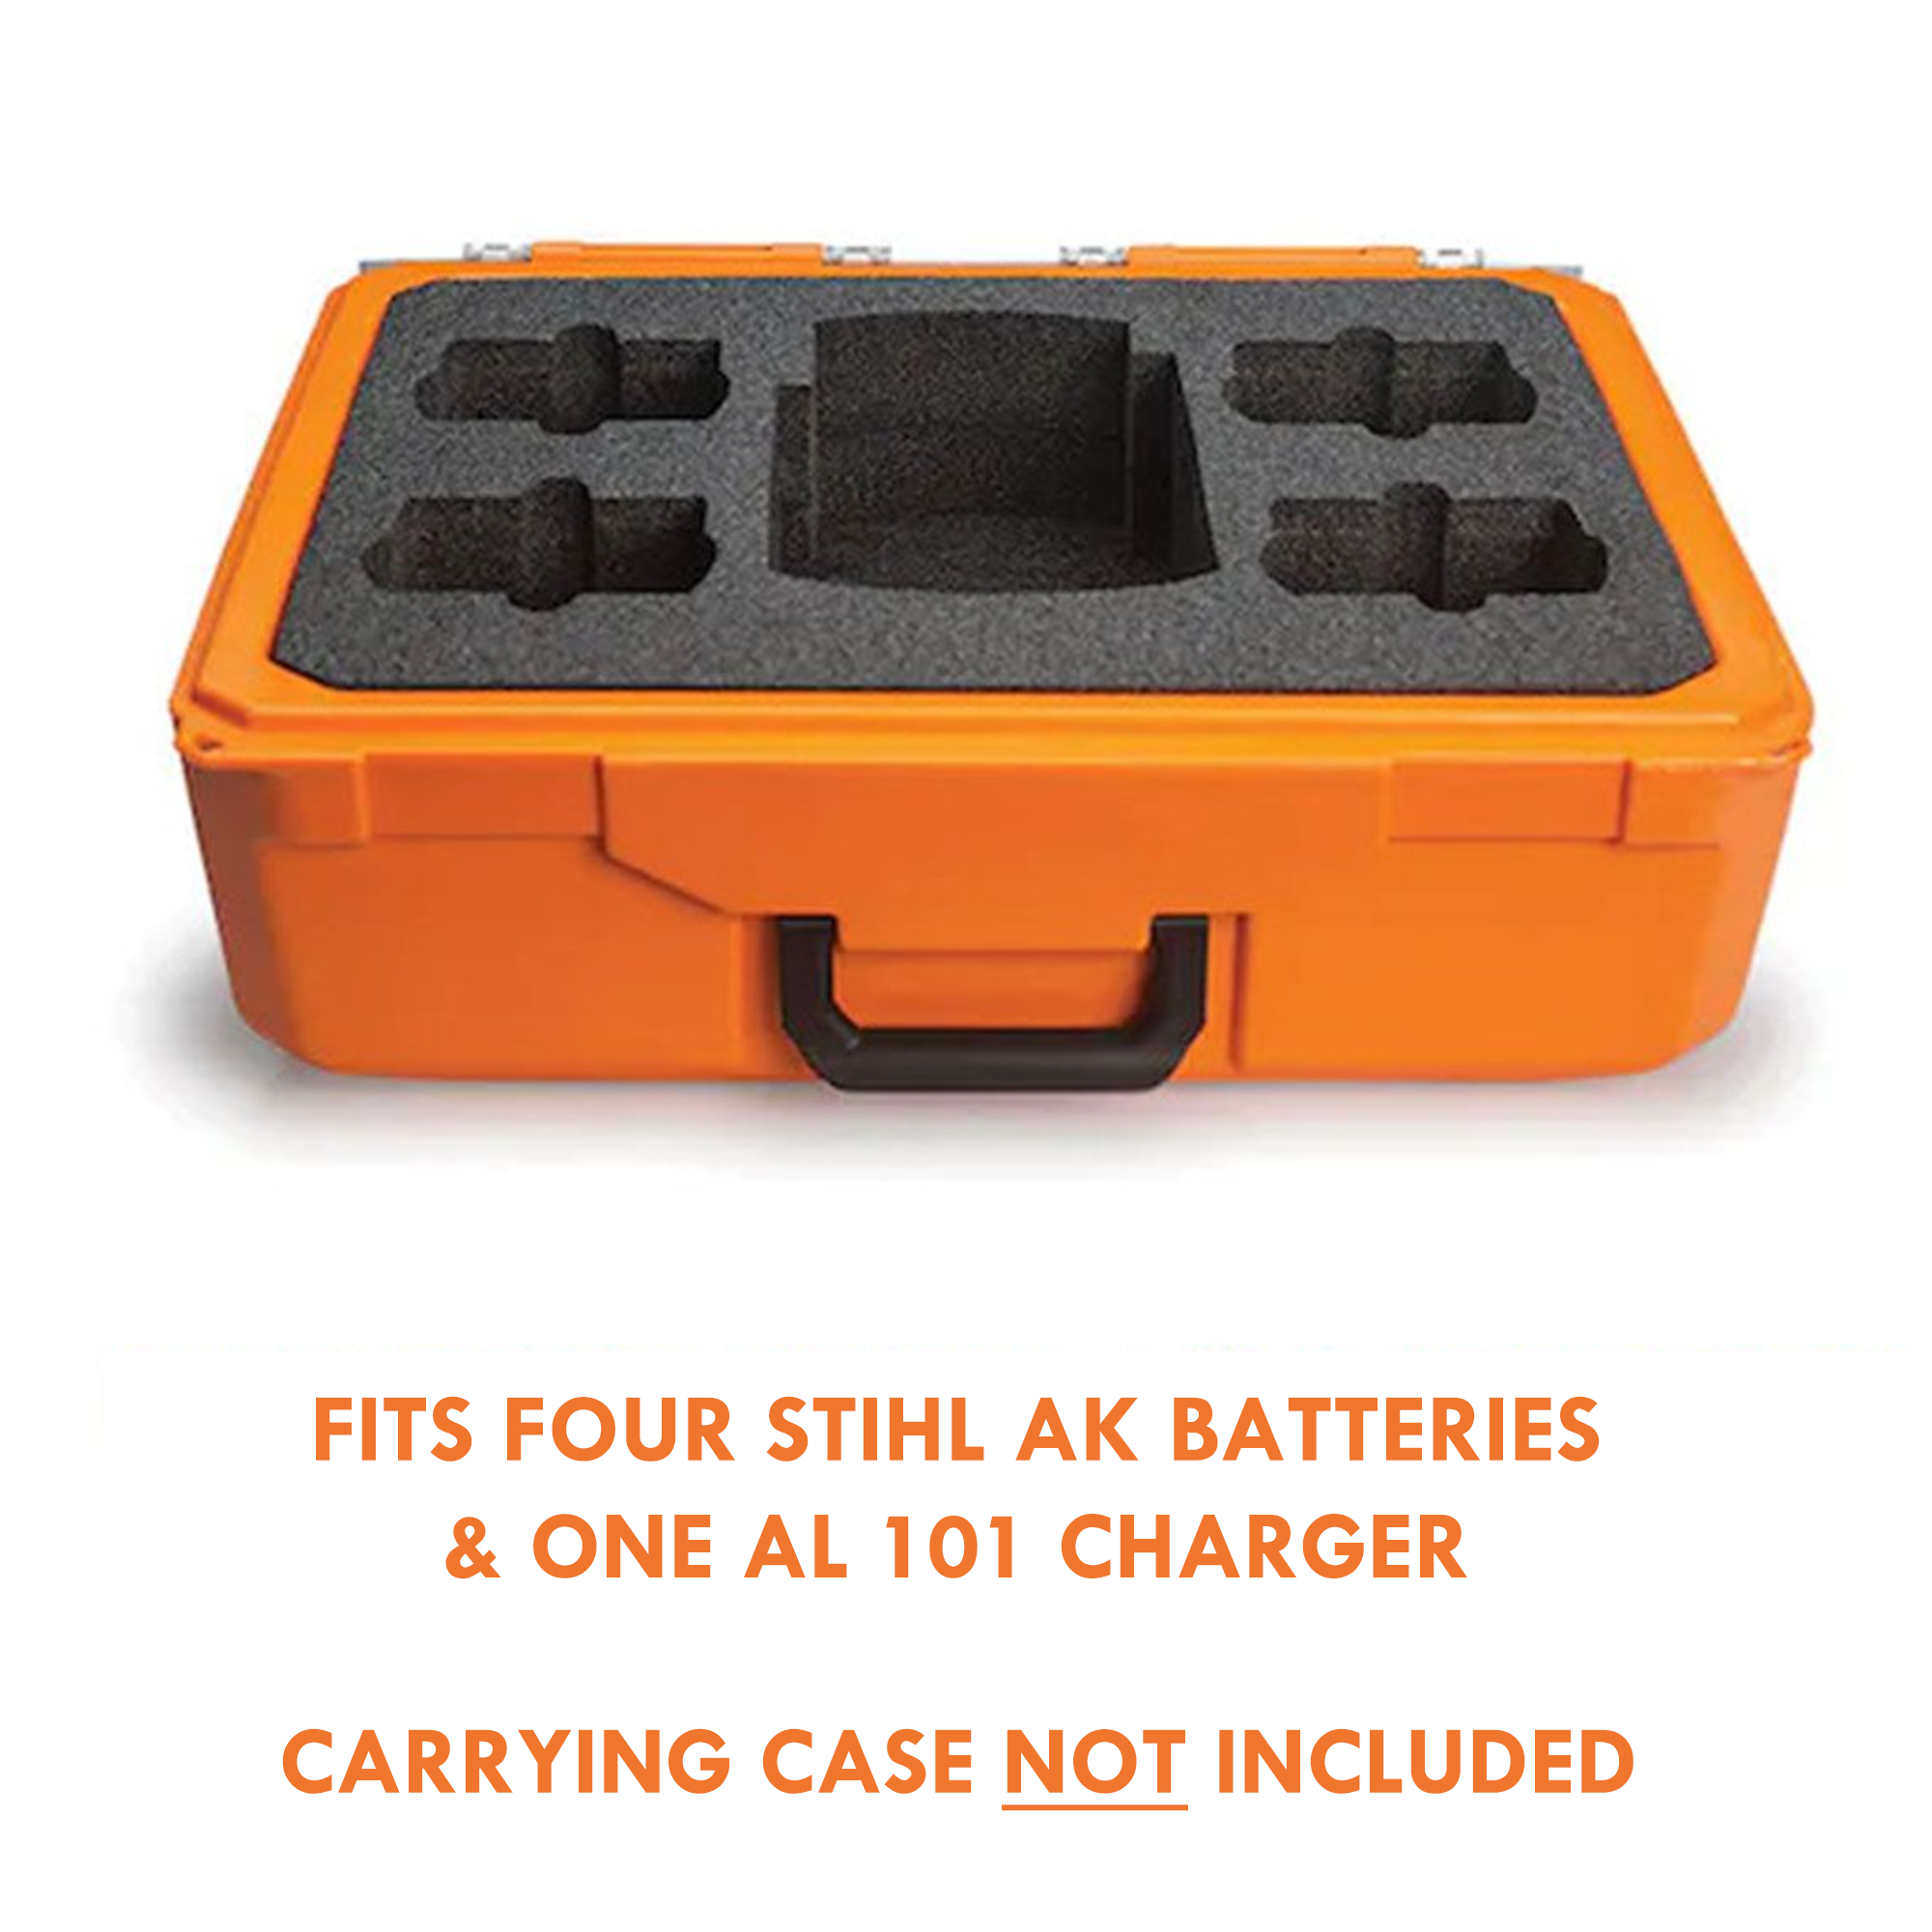 Stihl Battery Case Insert Fits 4 x AK & 1 x AL101 | 7010 871 0029